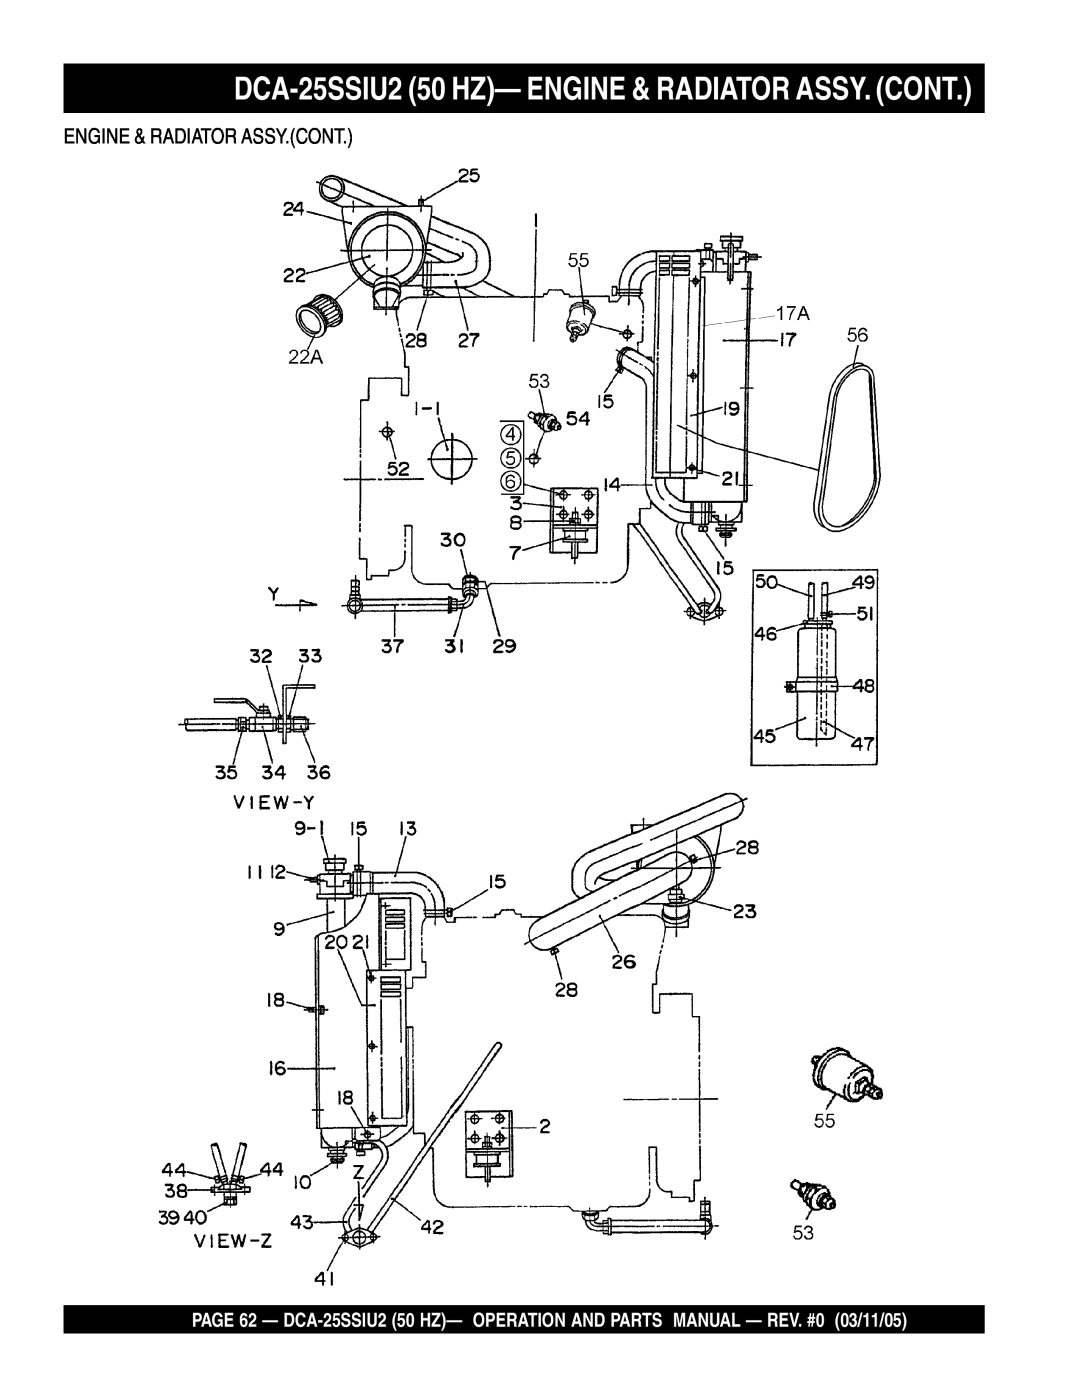 Multiquip operation manual DCA-25SSIU2 50 HZ- ENGINE & RADIATOR ASSY. CONT, Engine & Radiator Assy.Cont 